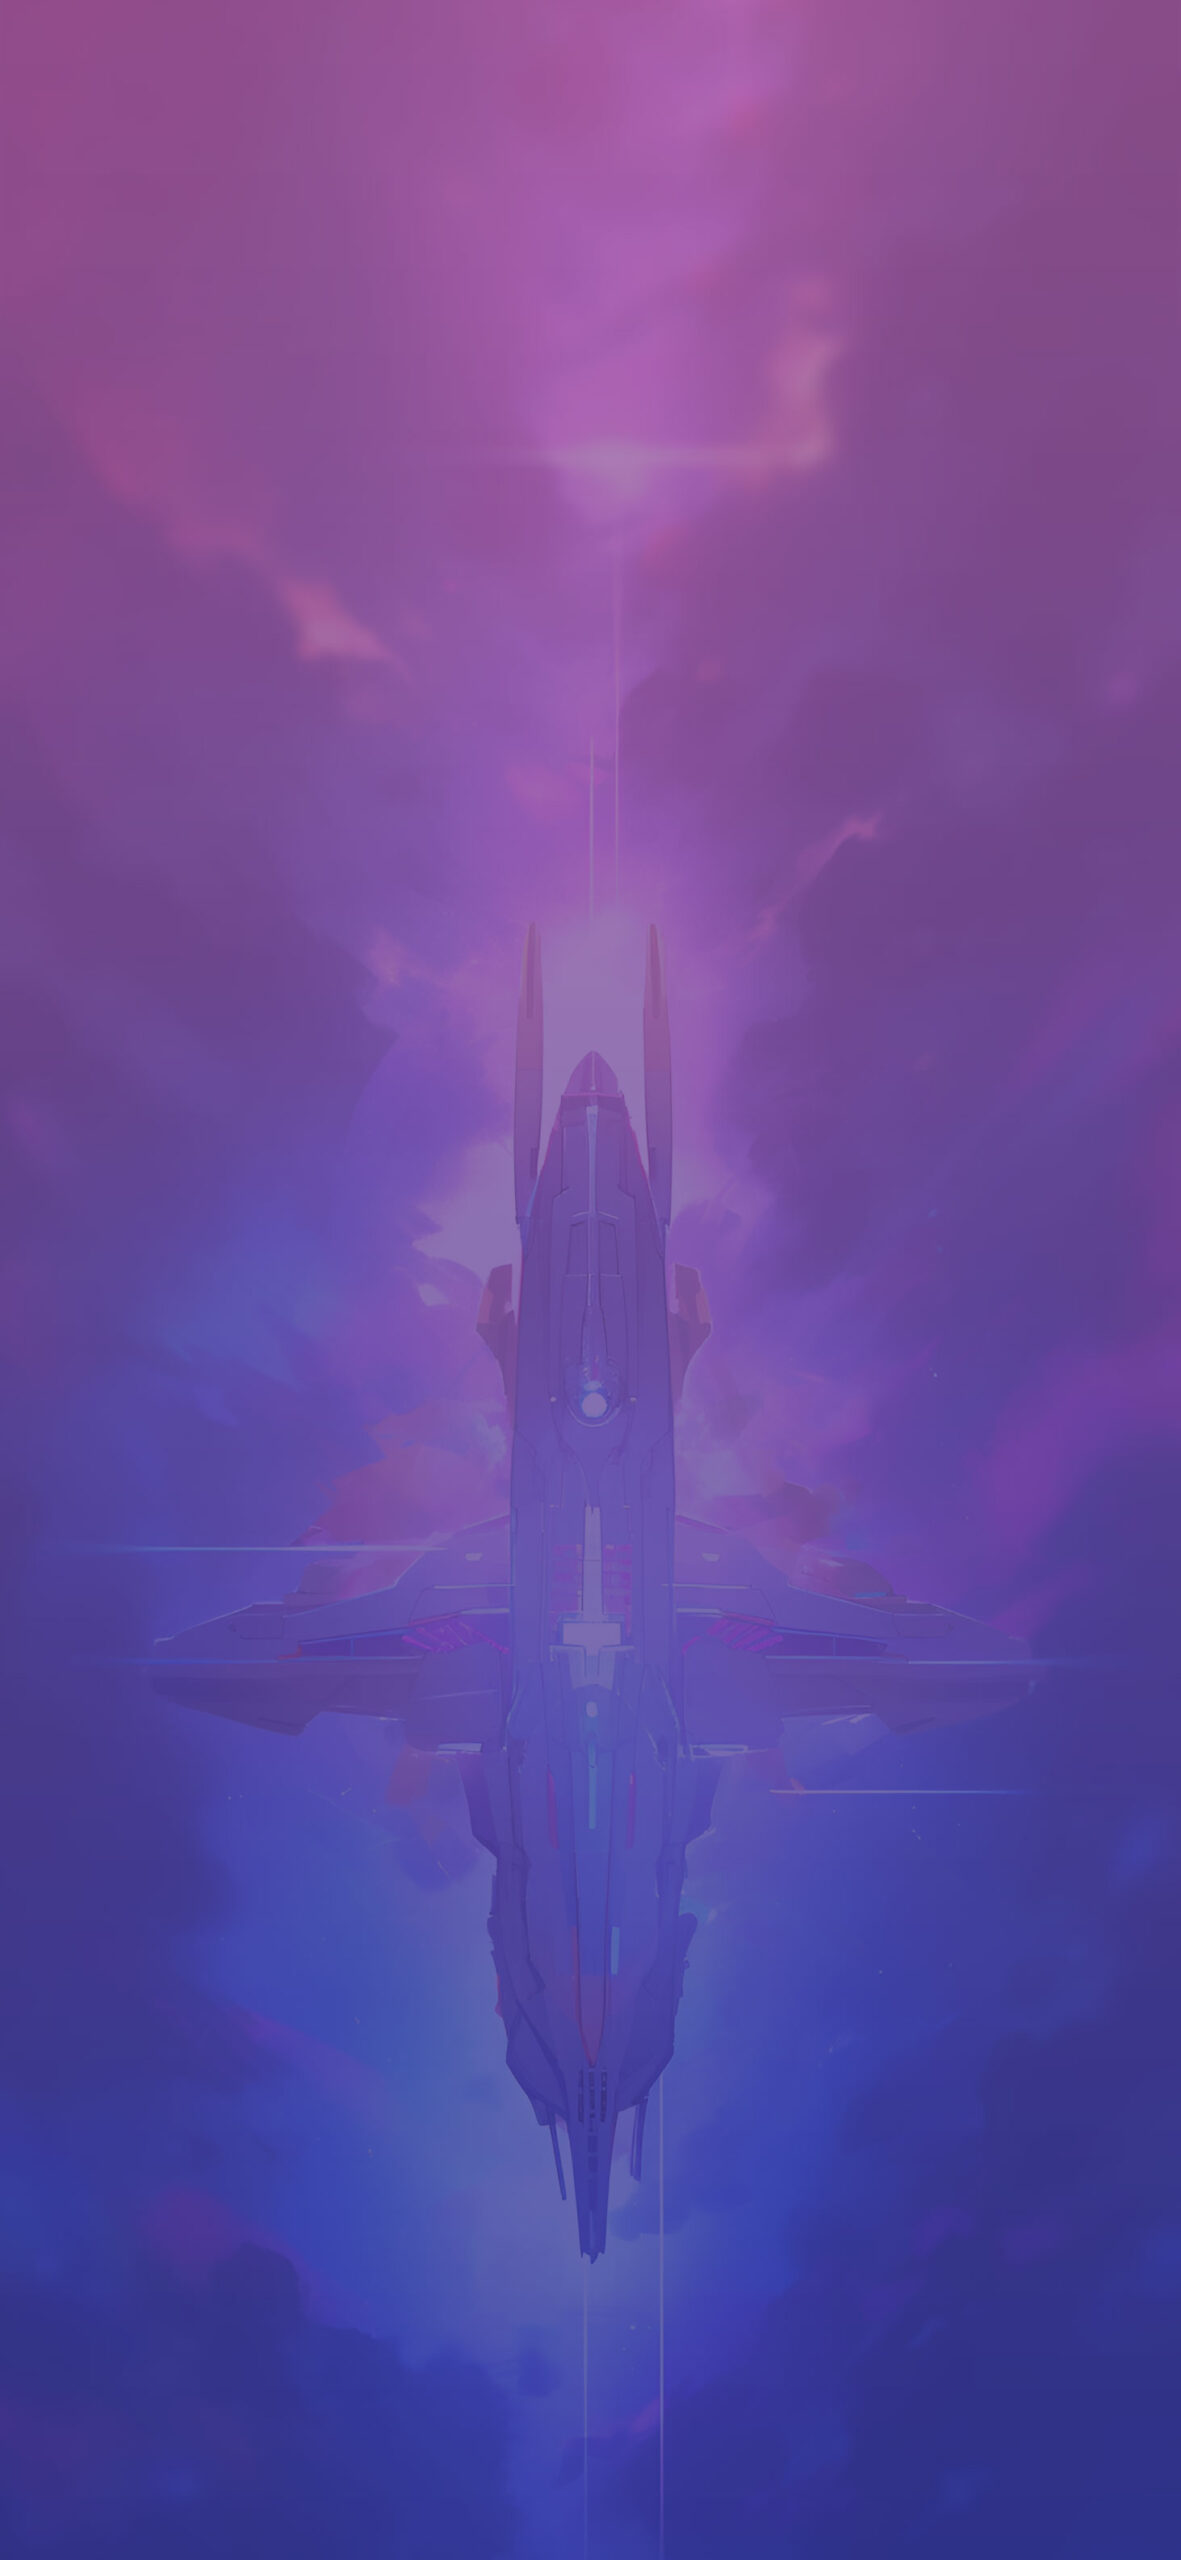 Futuristic spaceship aesthetic wallpaper Space blue & purple w